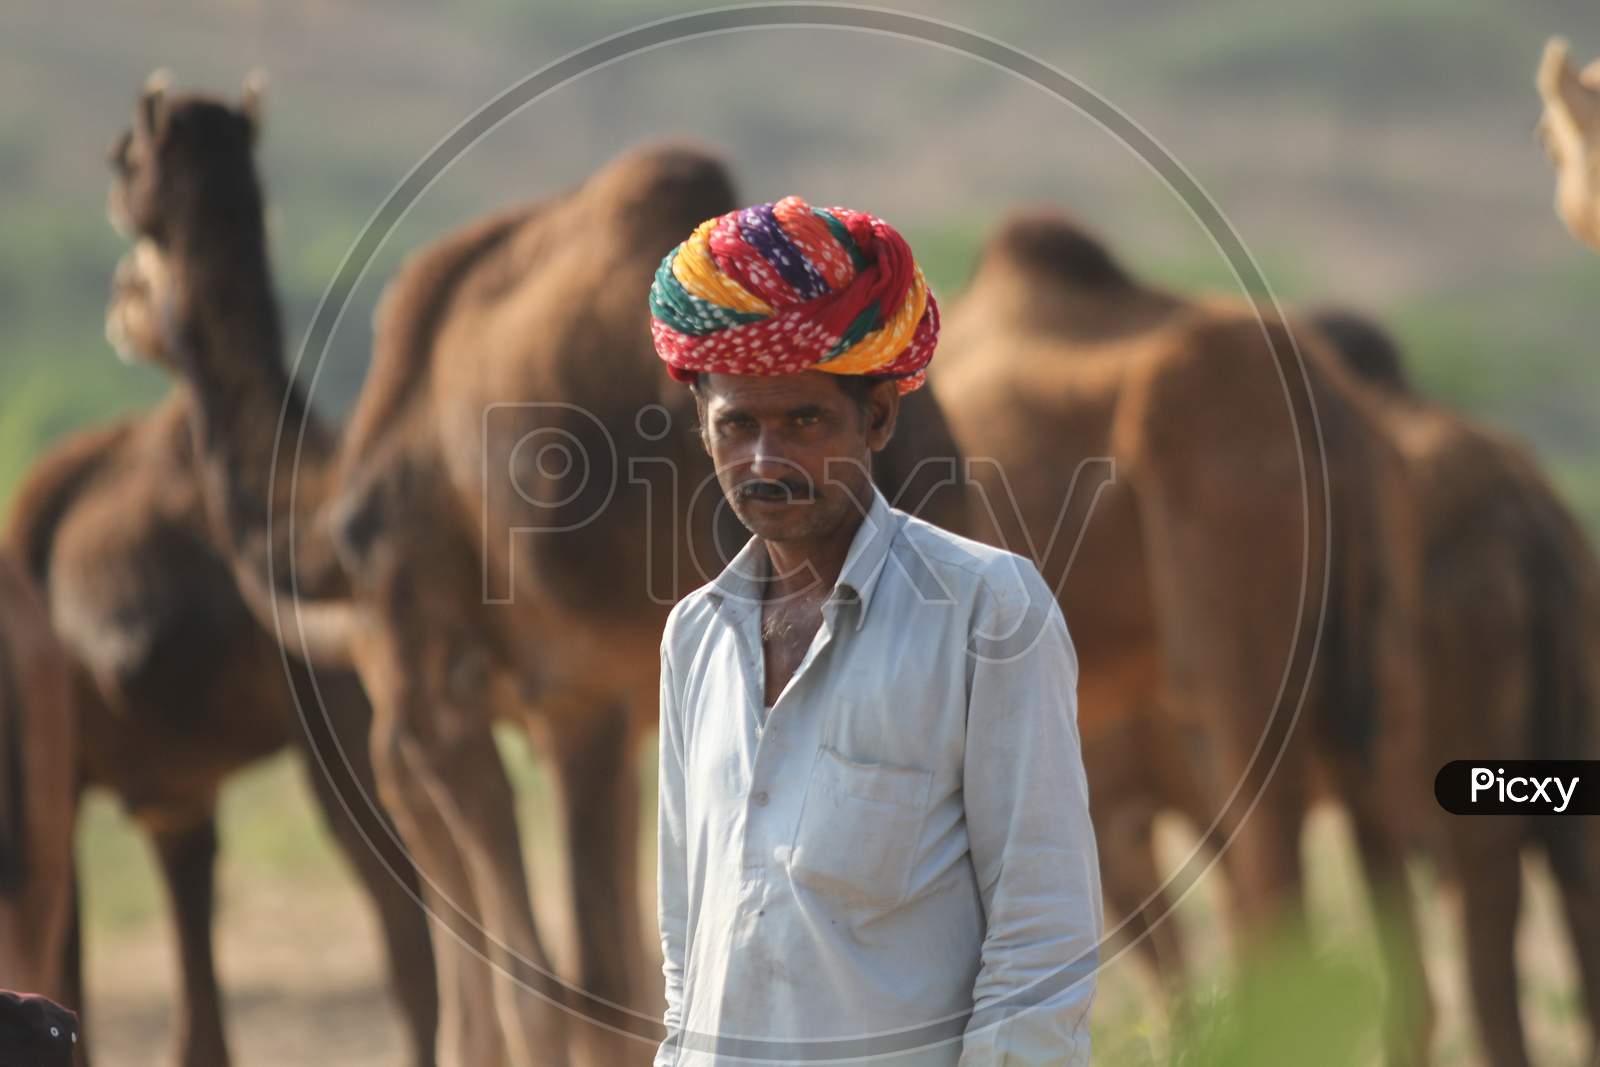 Rajasthani Camel Traders With Camels In Pushkar Camel Fair , Pushkar, Rajasthan